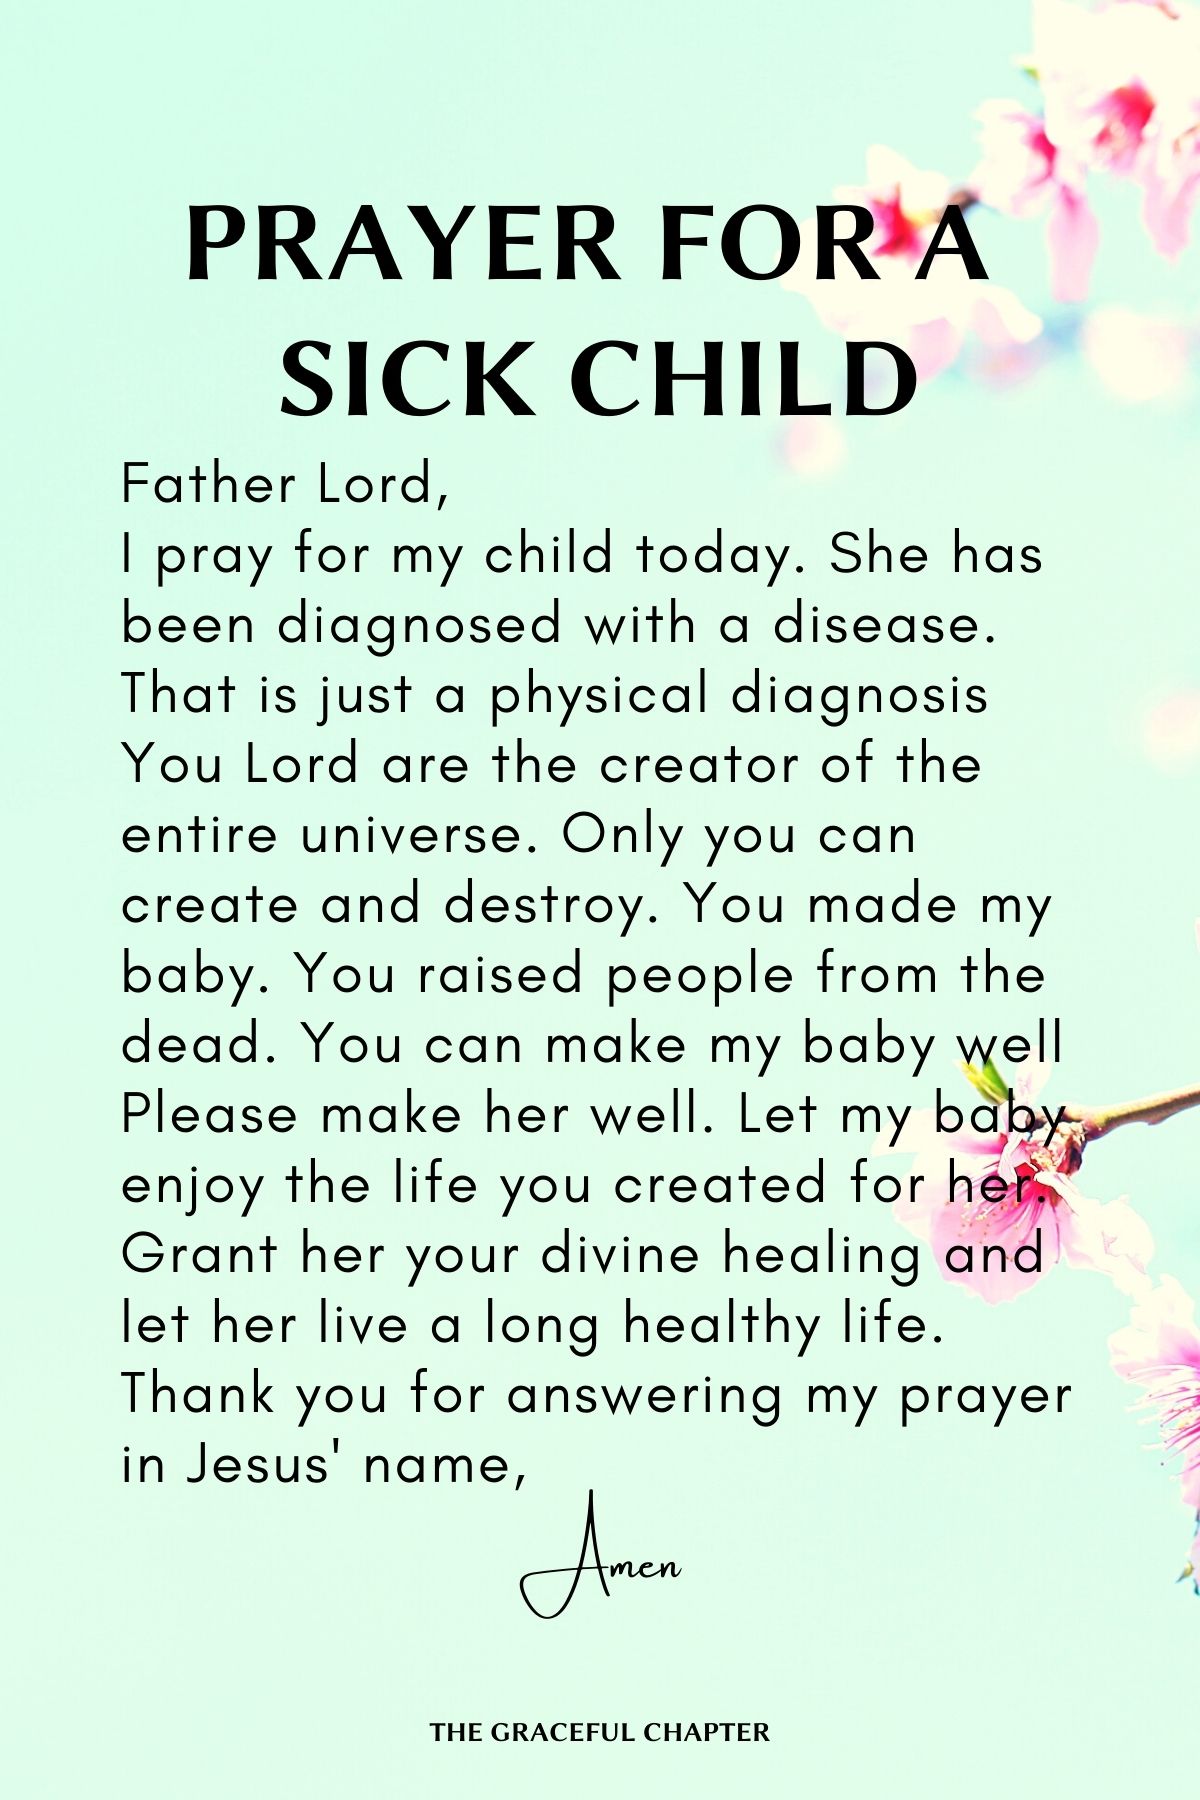 Prayer for a sick child